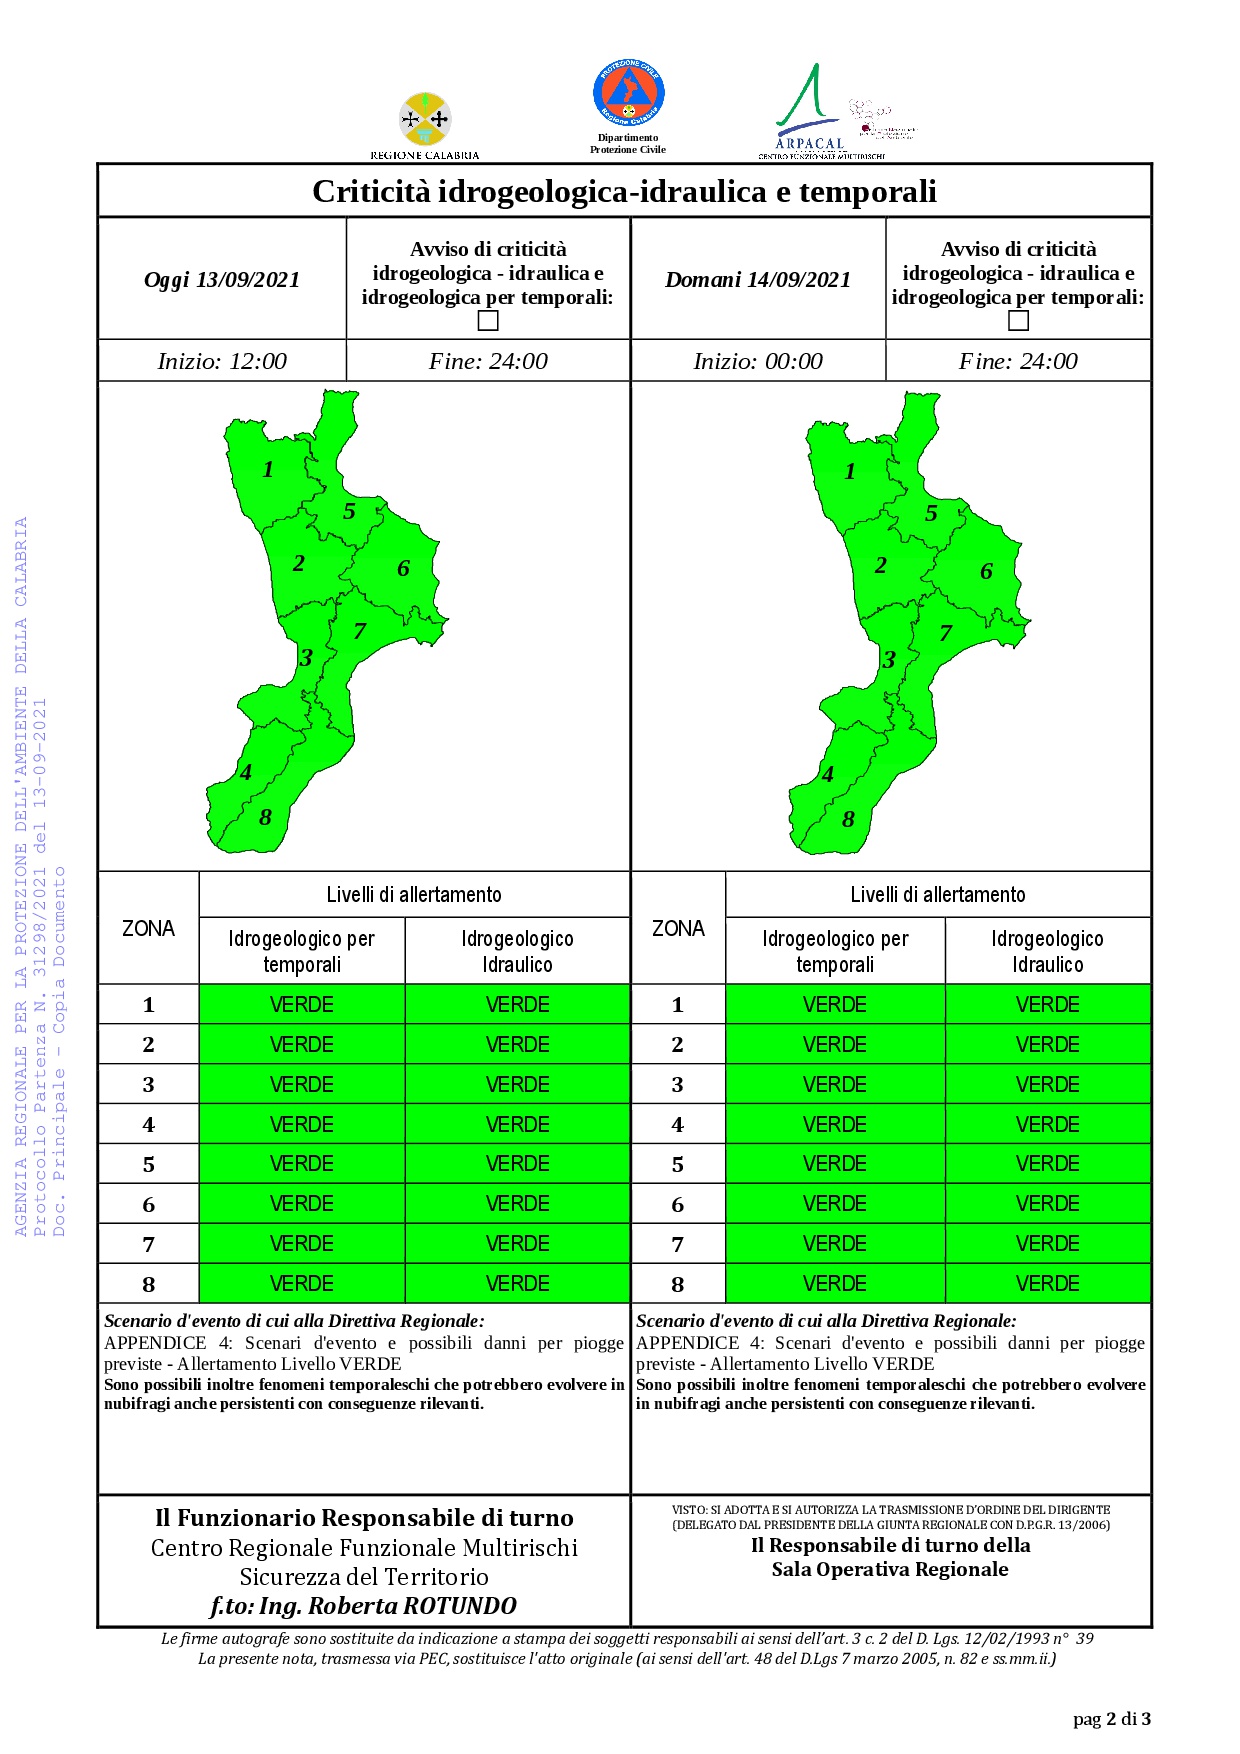 Criticità idrogeologica-idraulica e temporali in Calabria 13-09-2021